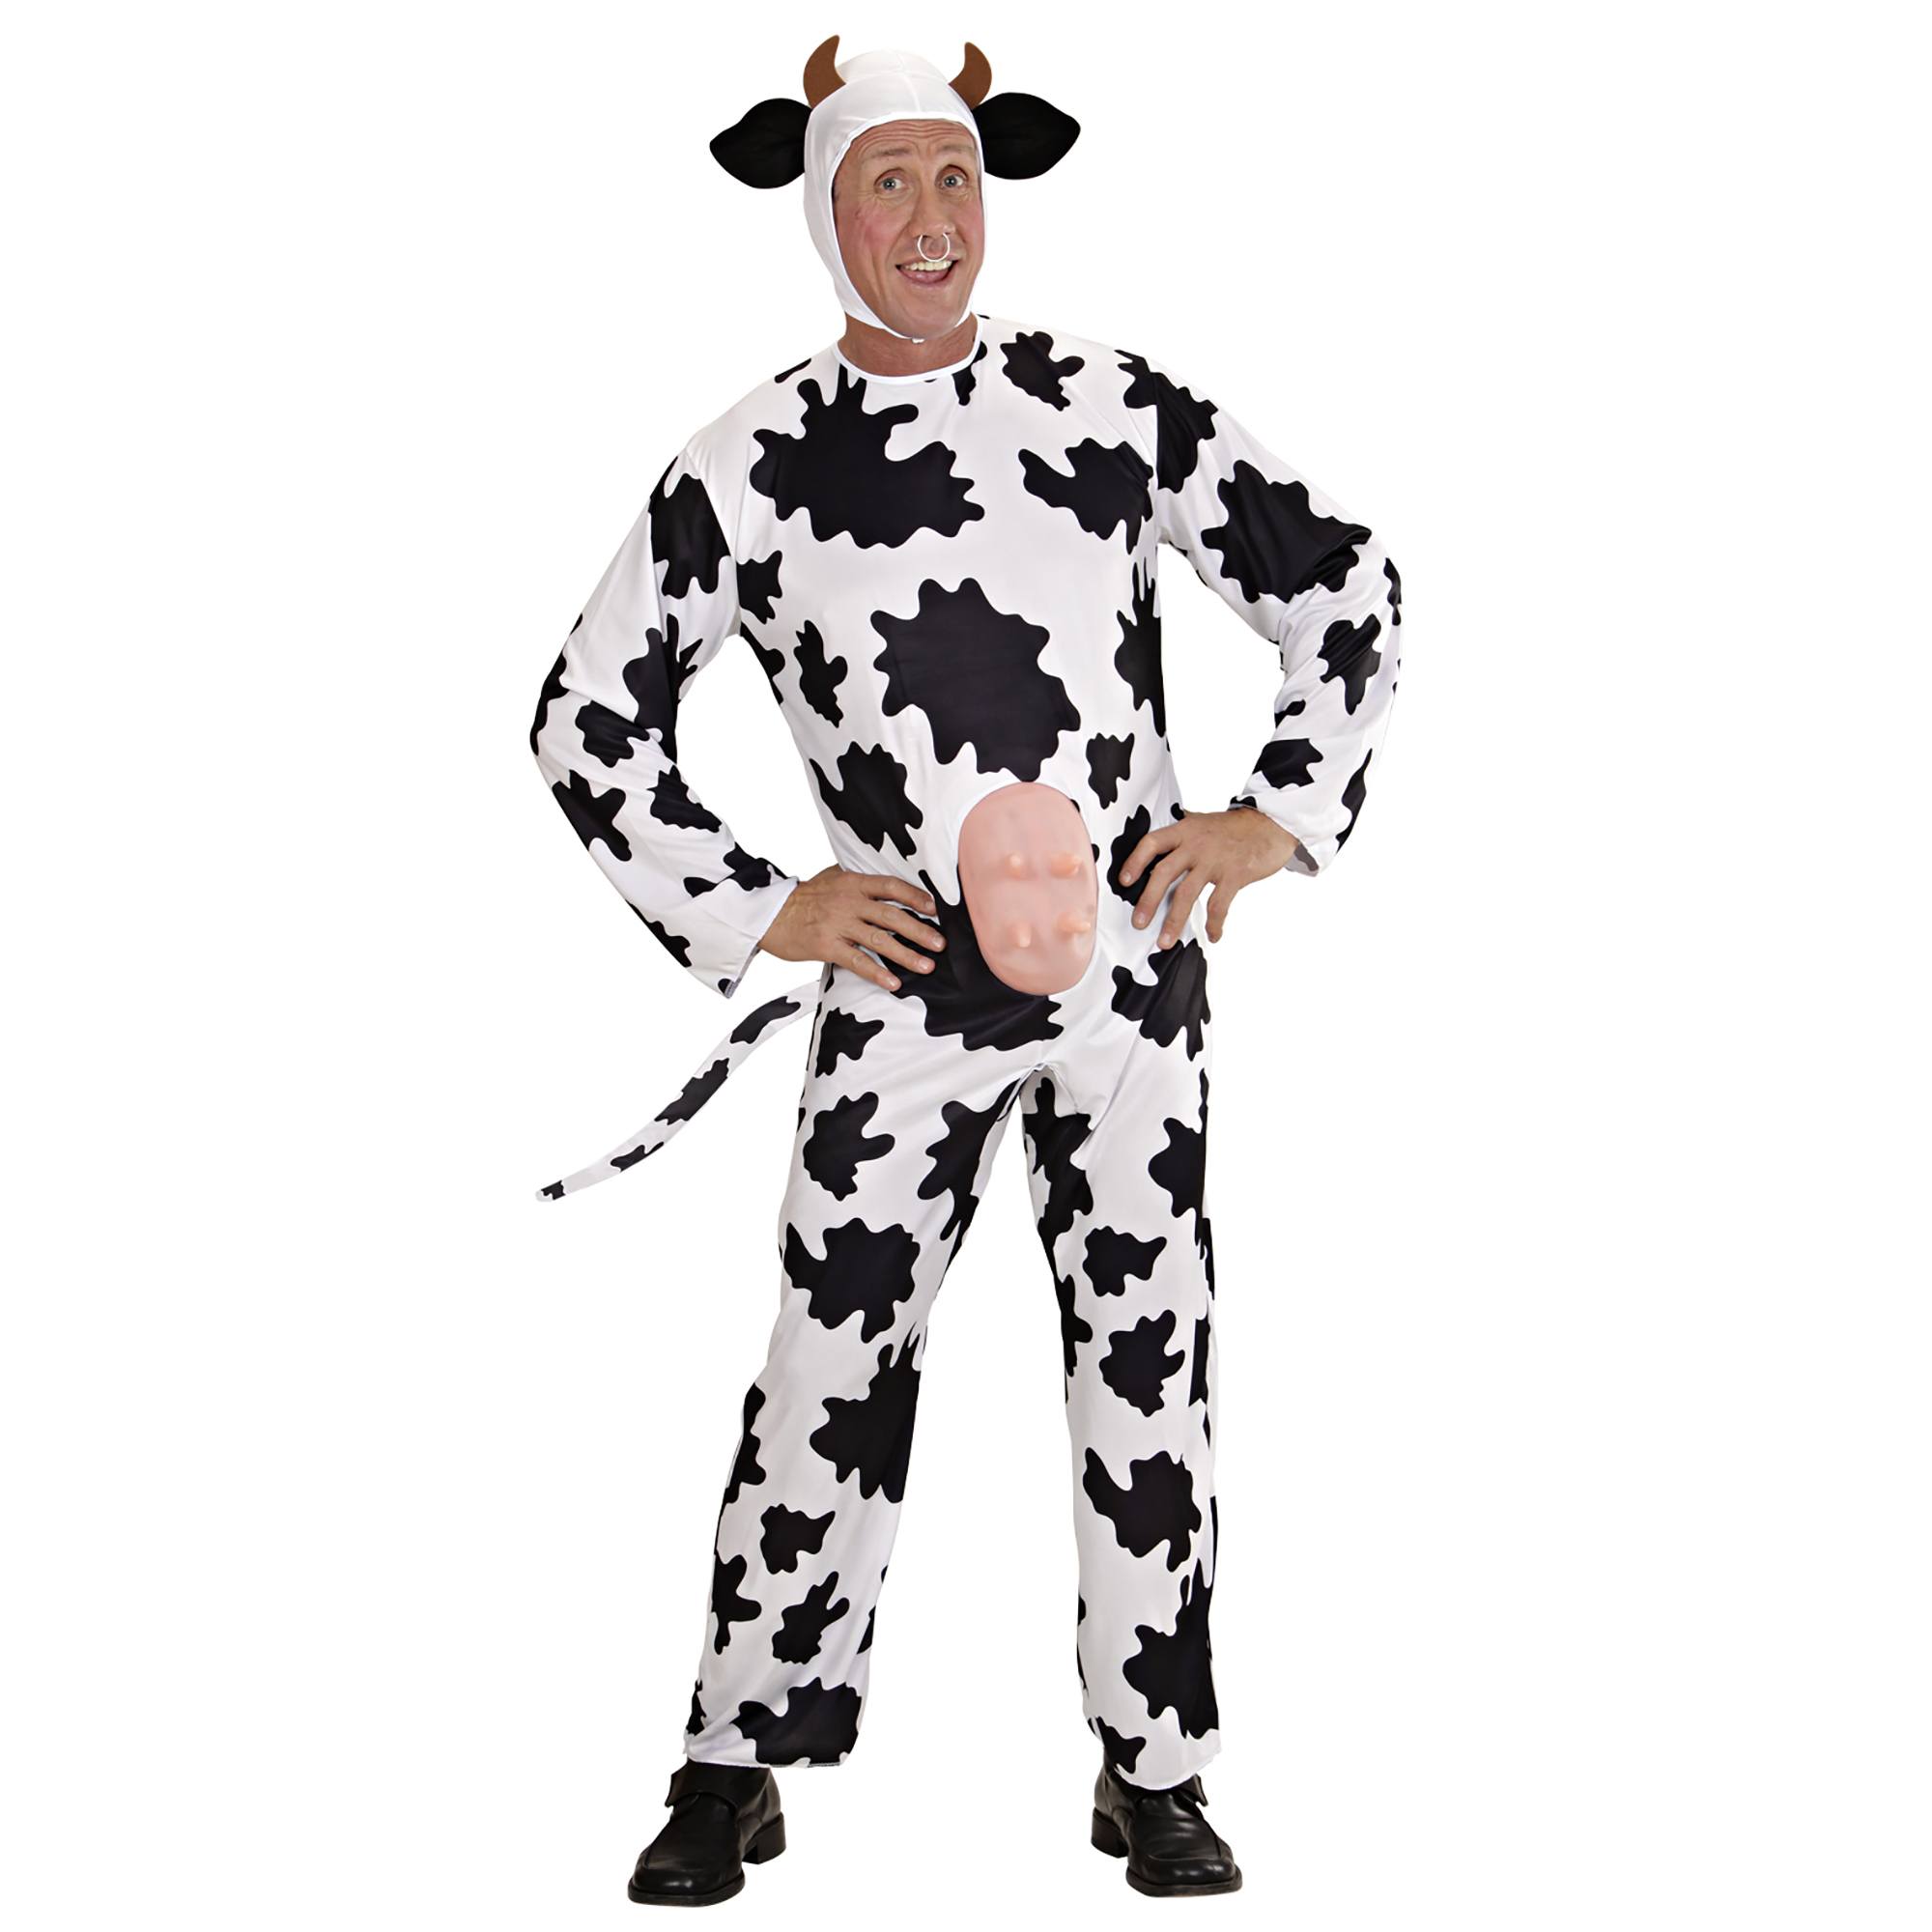 Loei grappig koeien kostuum koeienpak volwassen